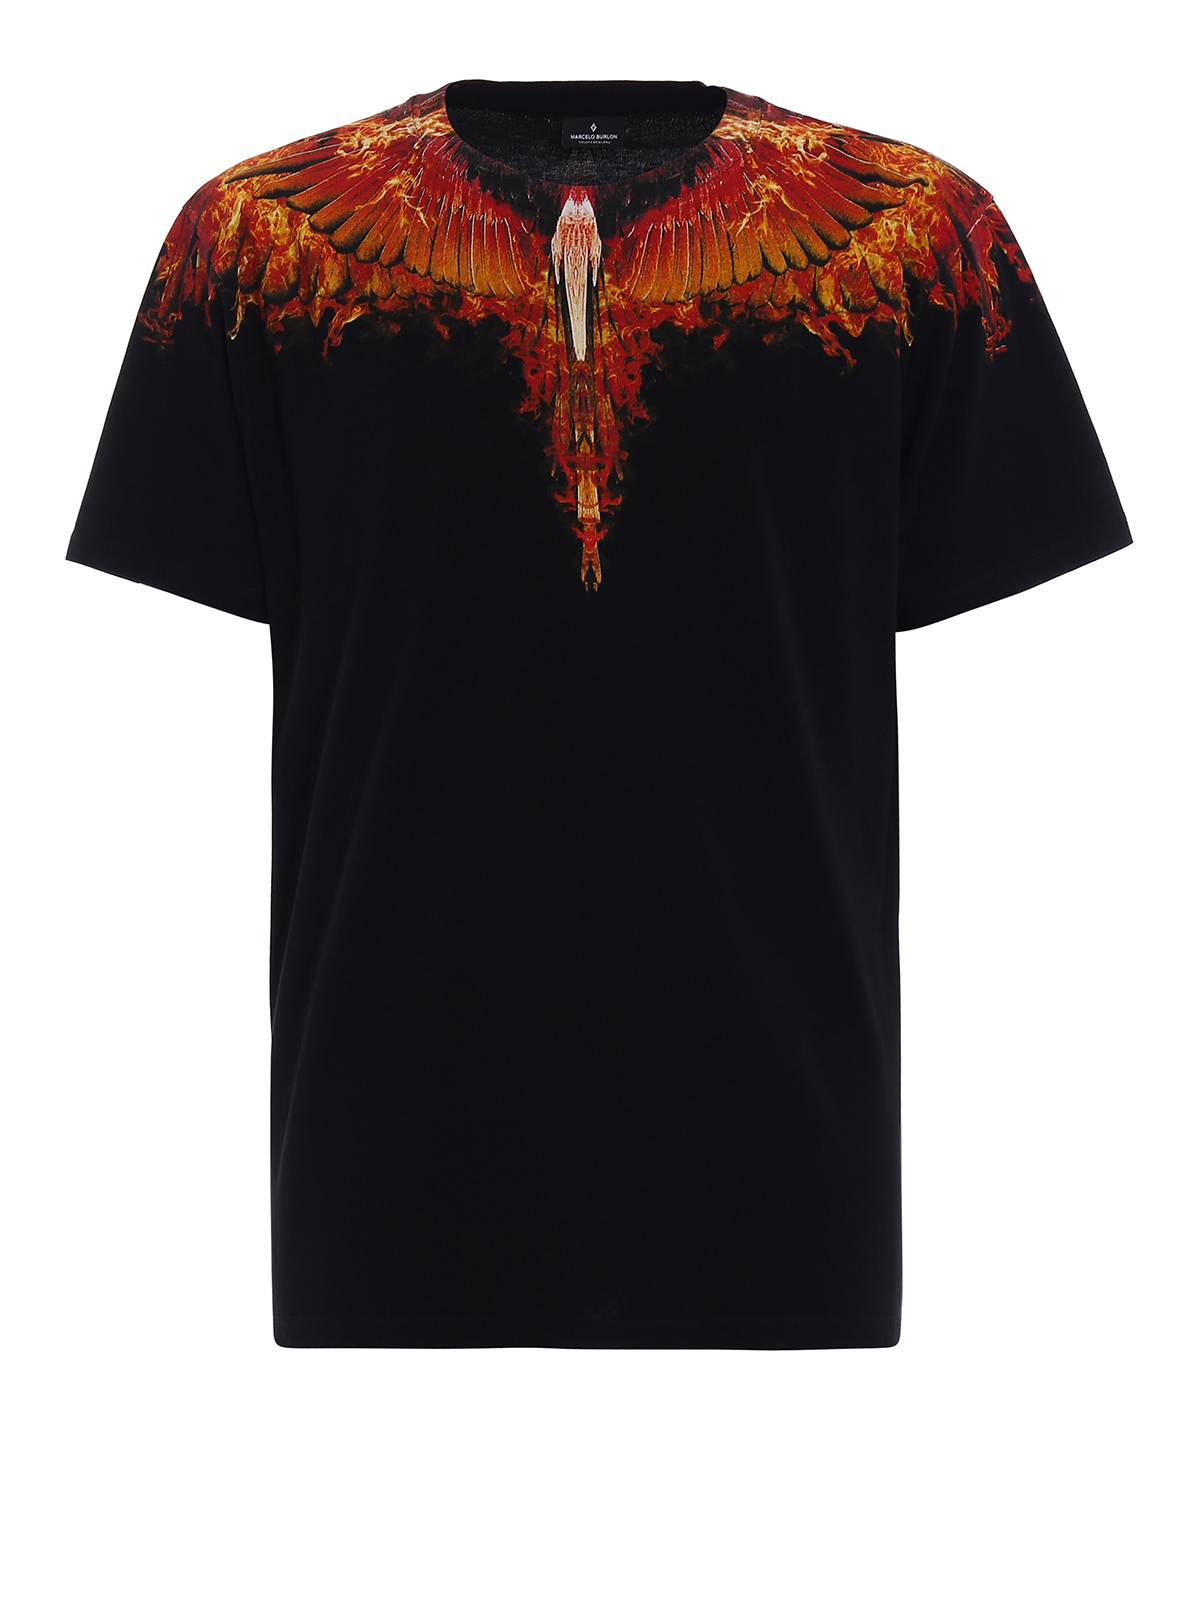 T-shirts - Flame wings print cotton T-shirt -